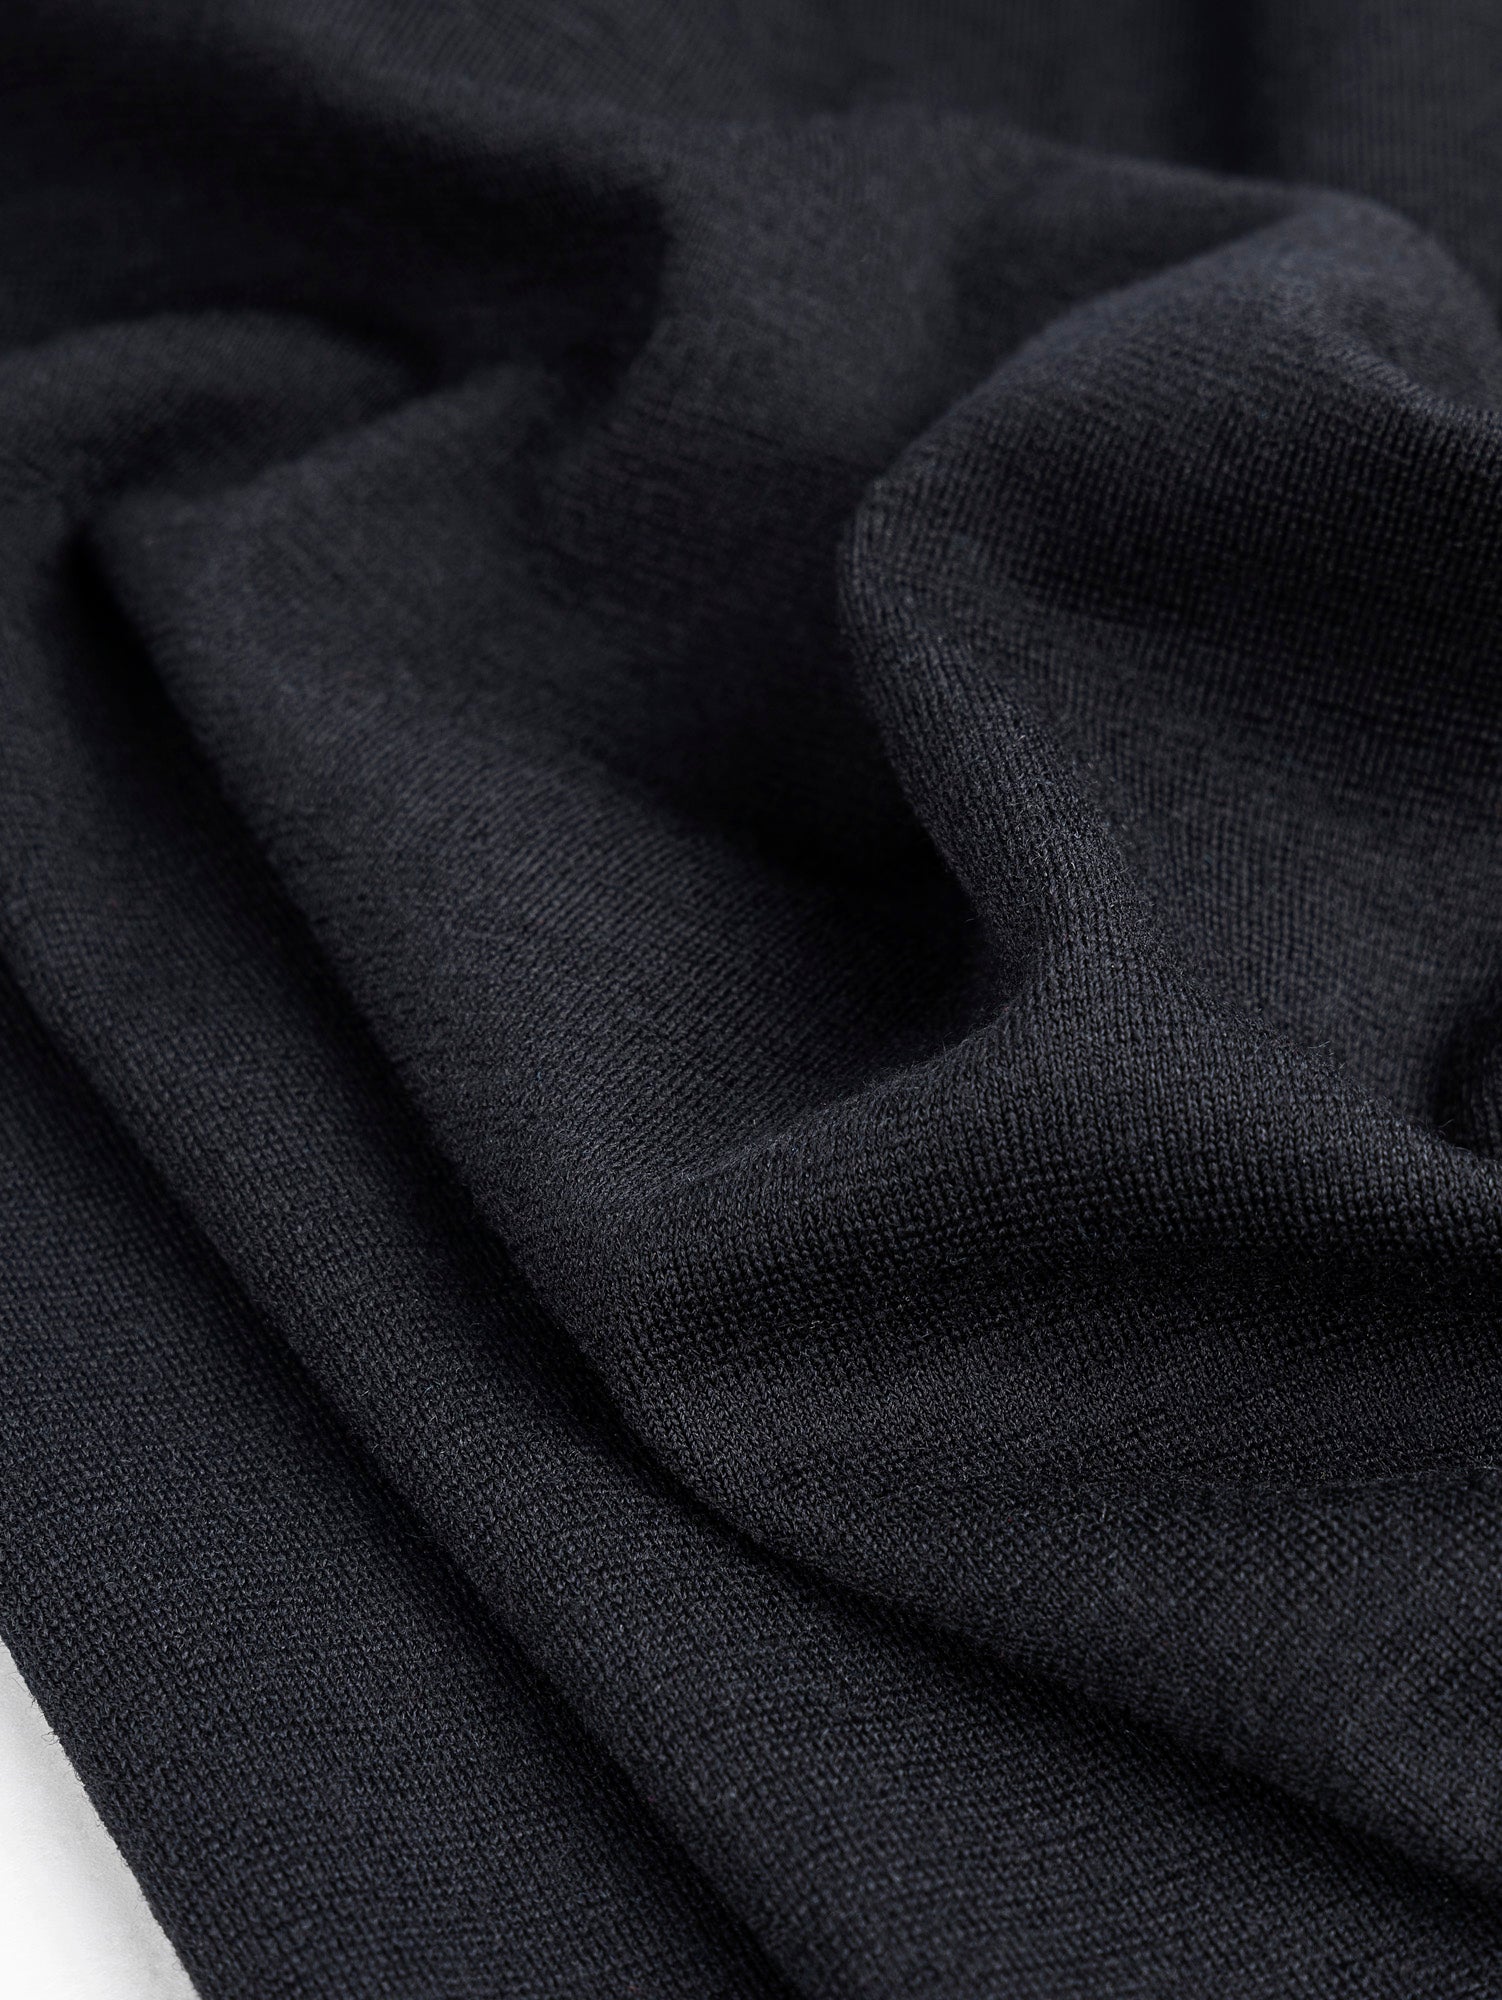 Merino Wool Blend Fabric 4 Way Stretch Ponte Knit 350gsm Black EZ21 